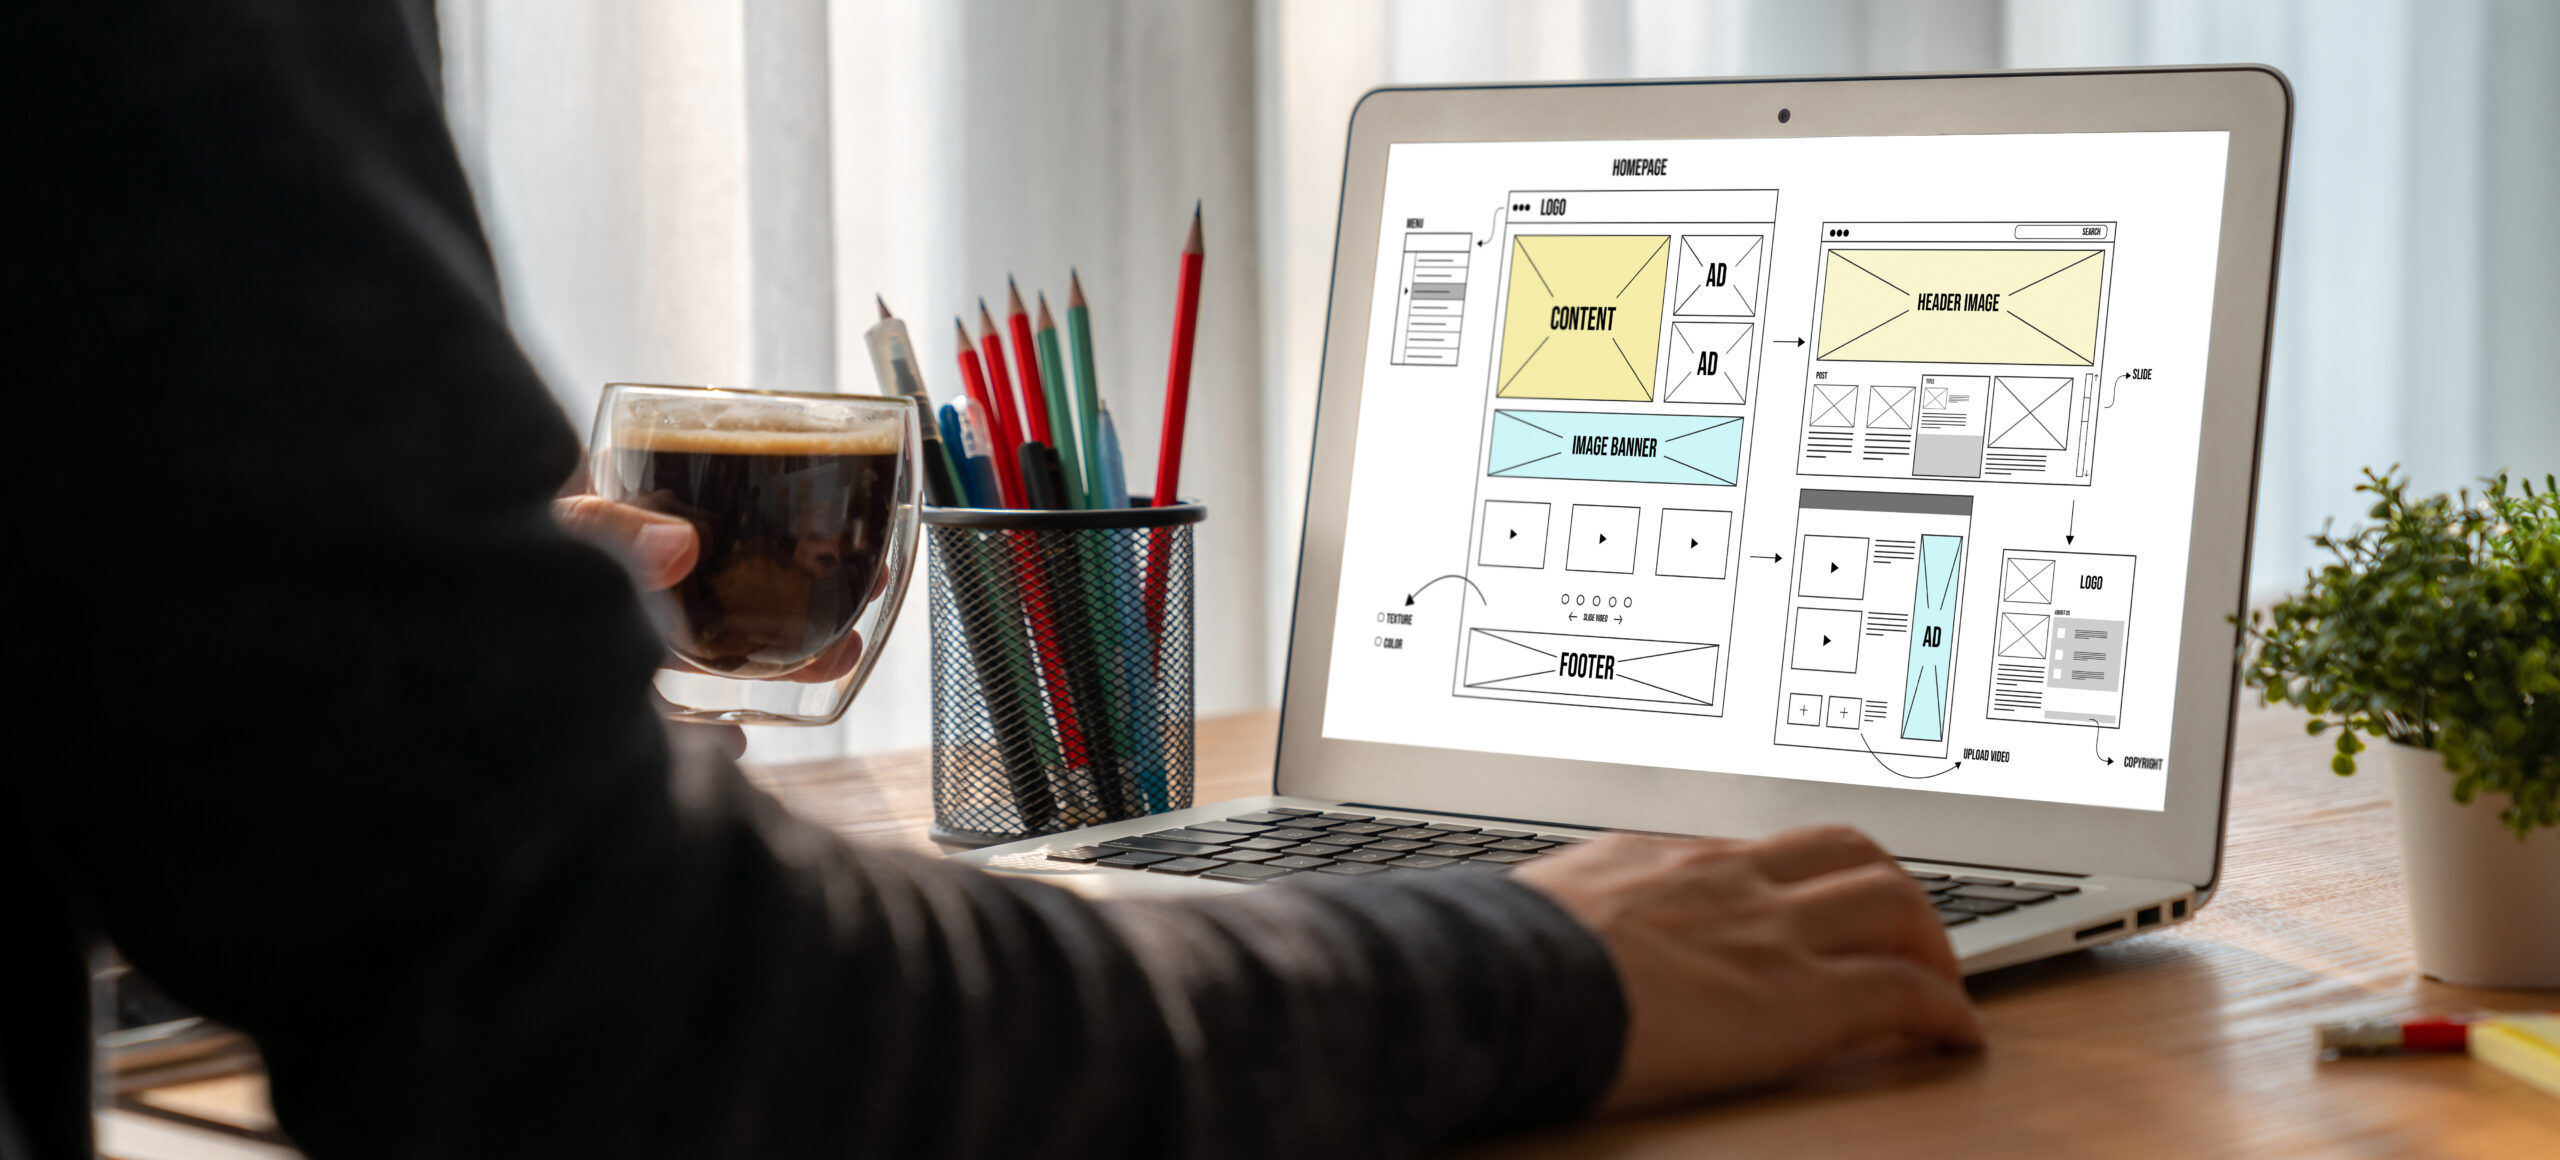 Website design software provide modish template for online retail business